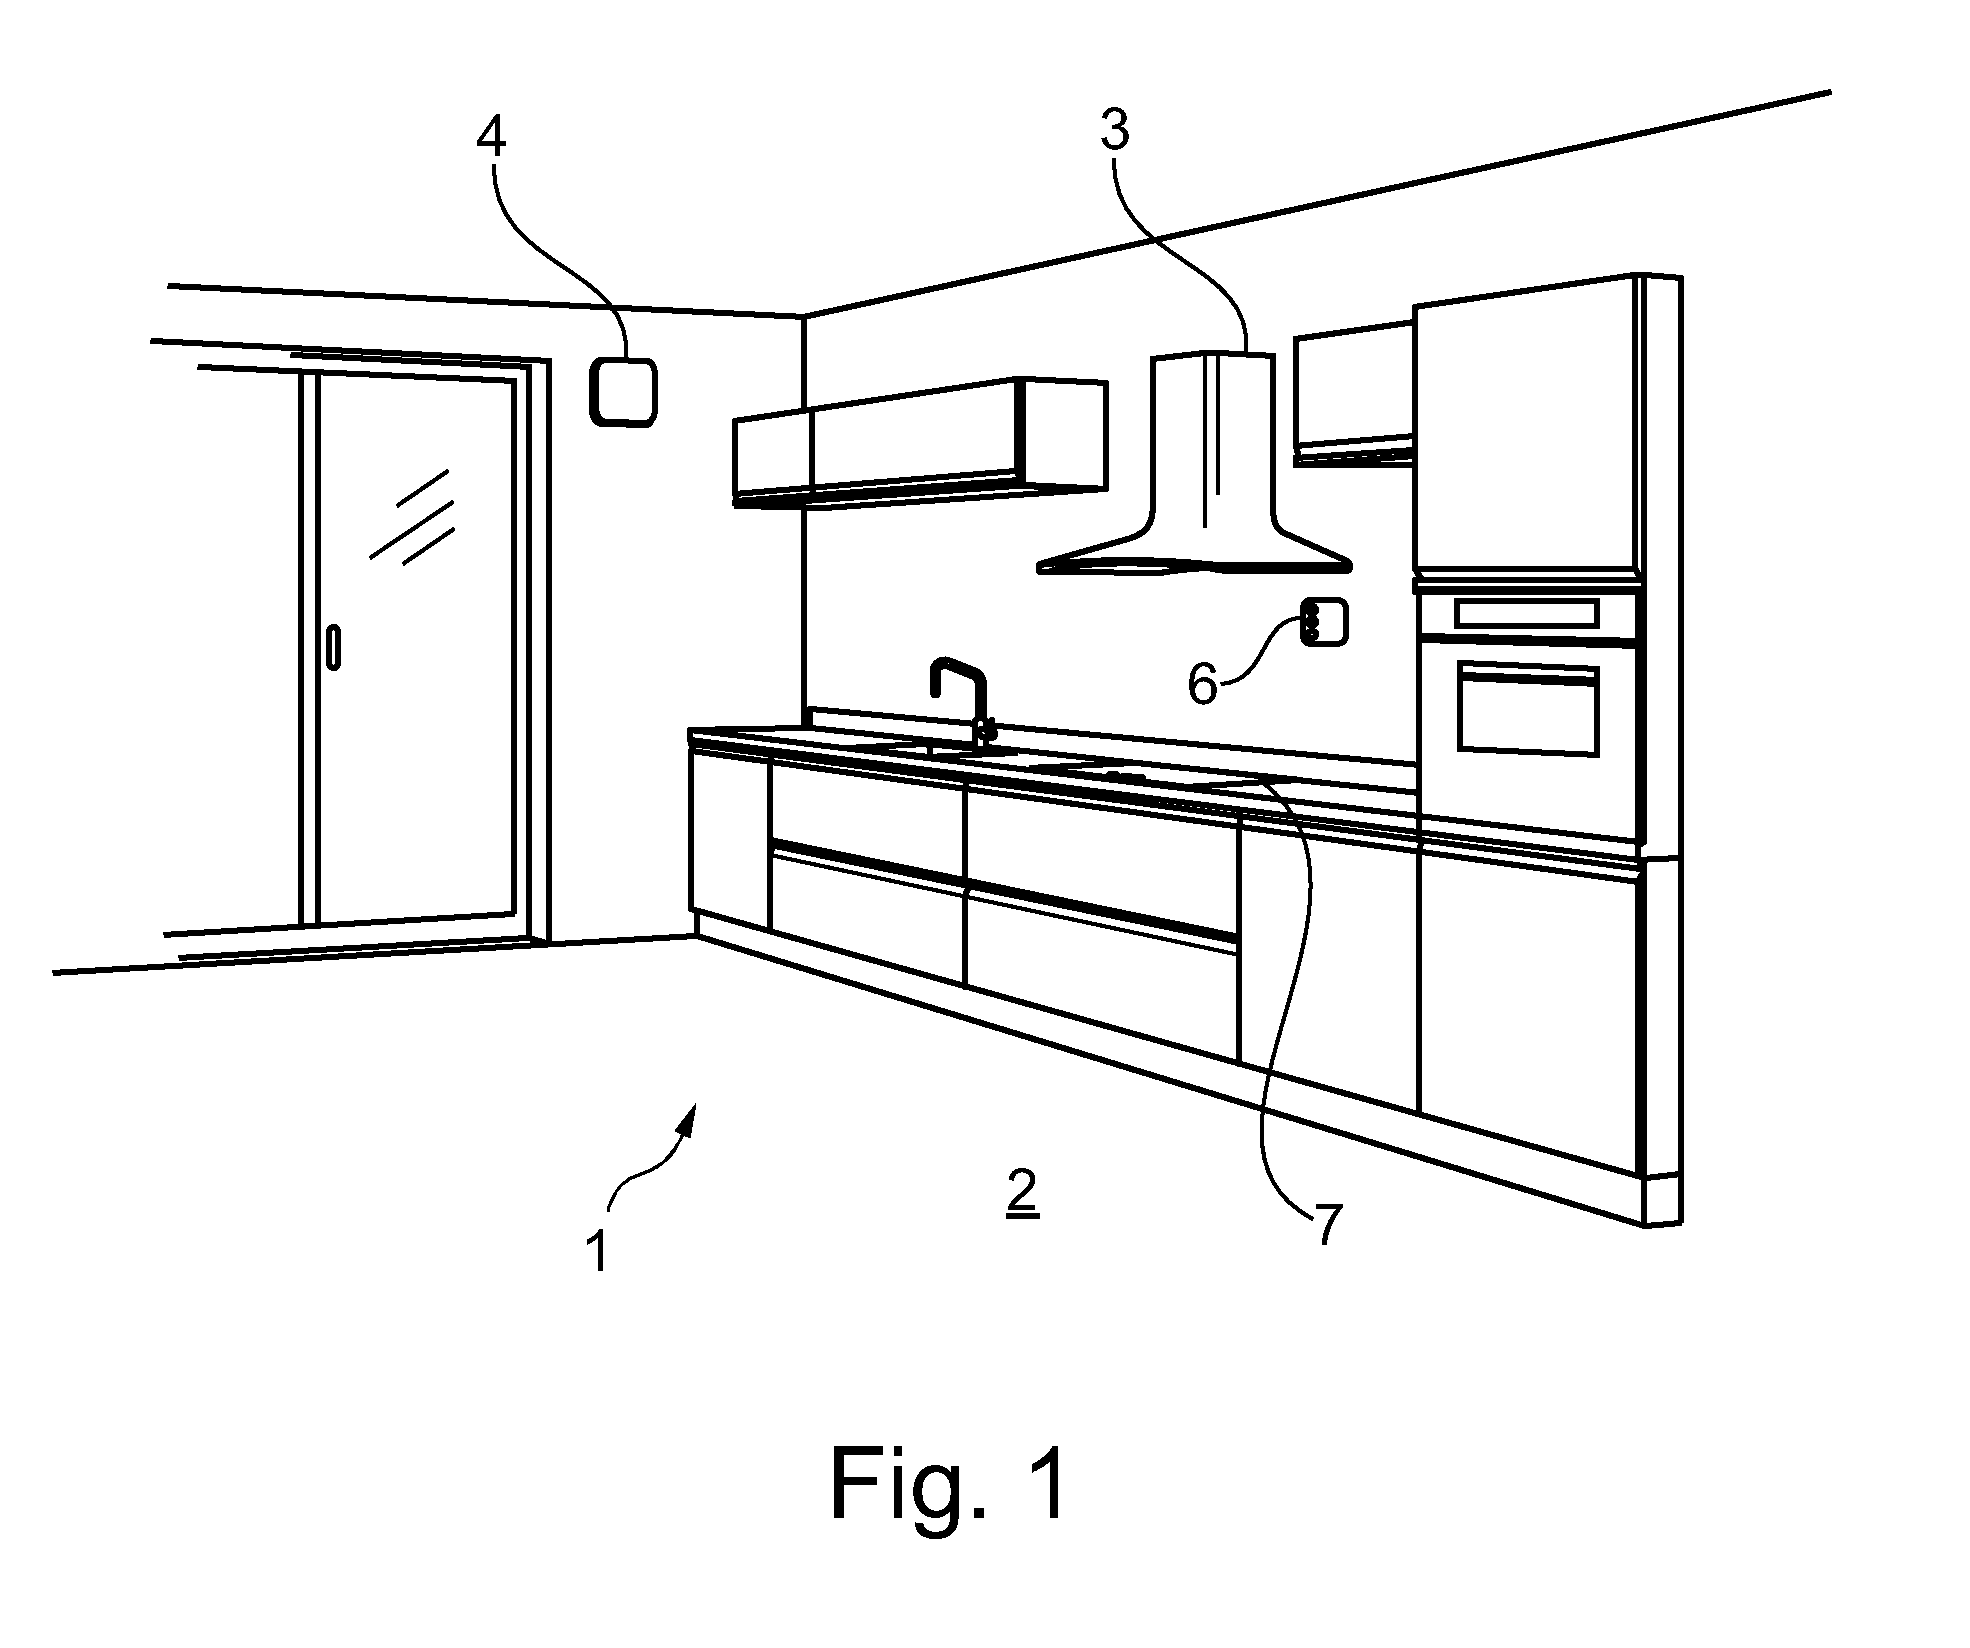 Ventilation system for a room